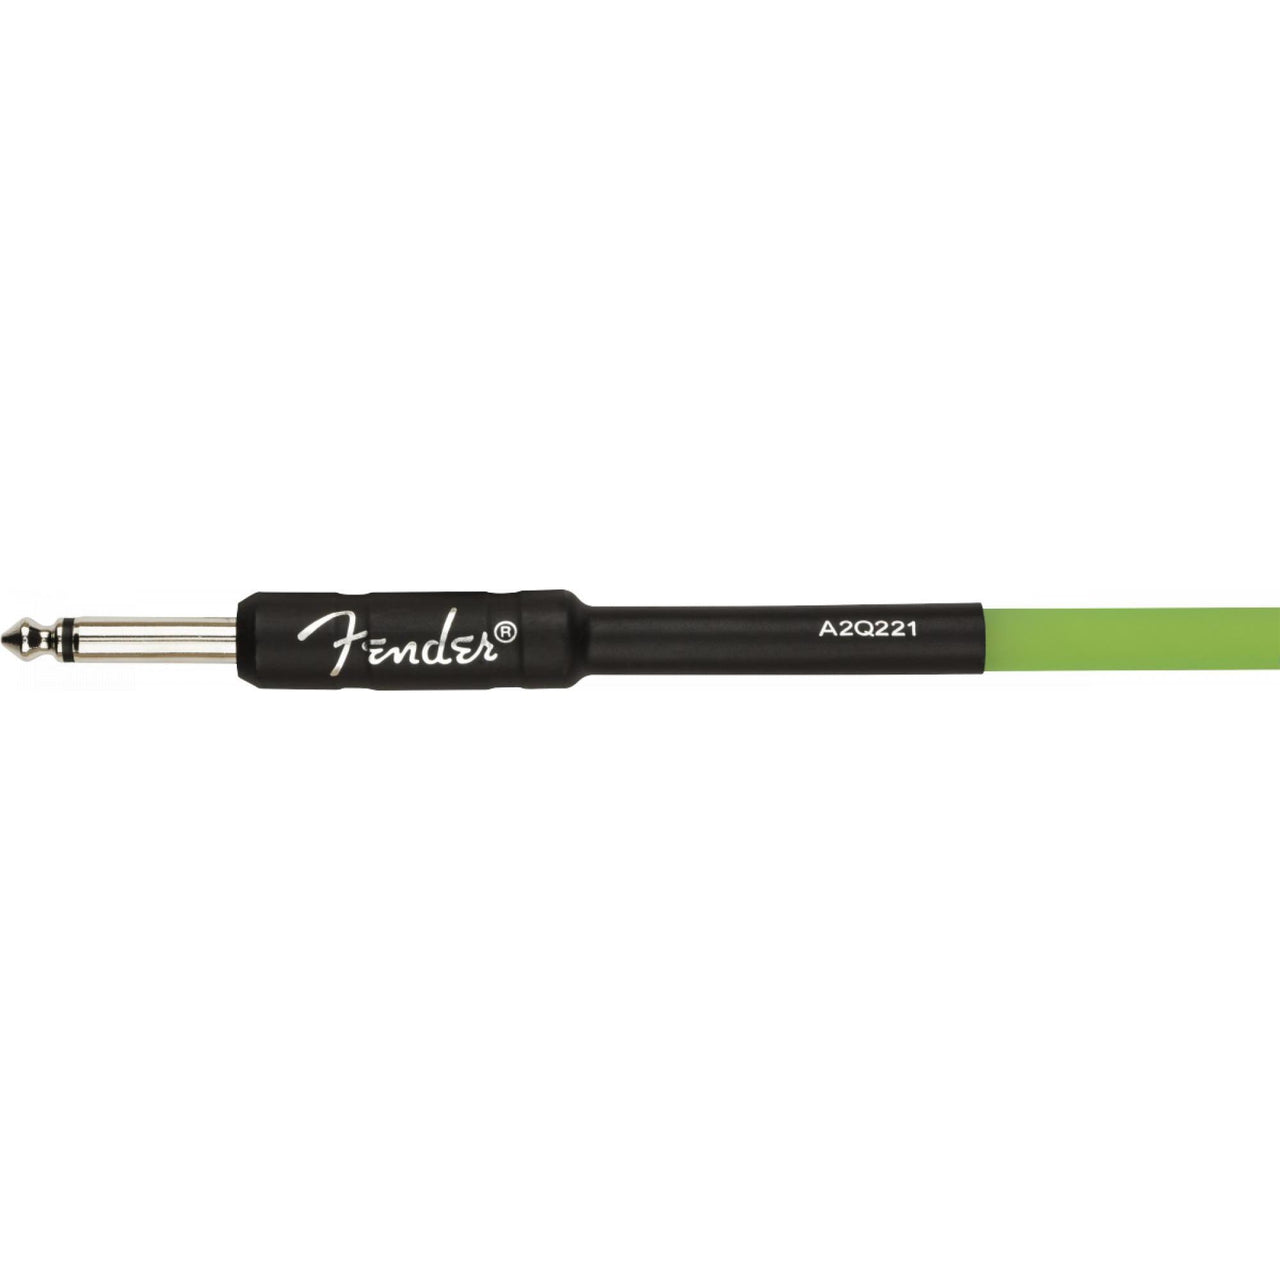 Cable Fender Pro 5.5 Metros Glow In Dark Verde 0990818119